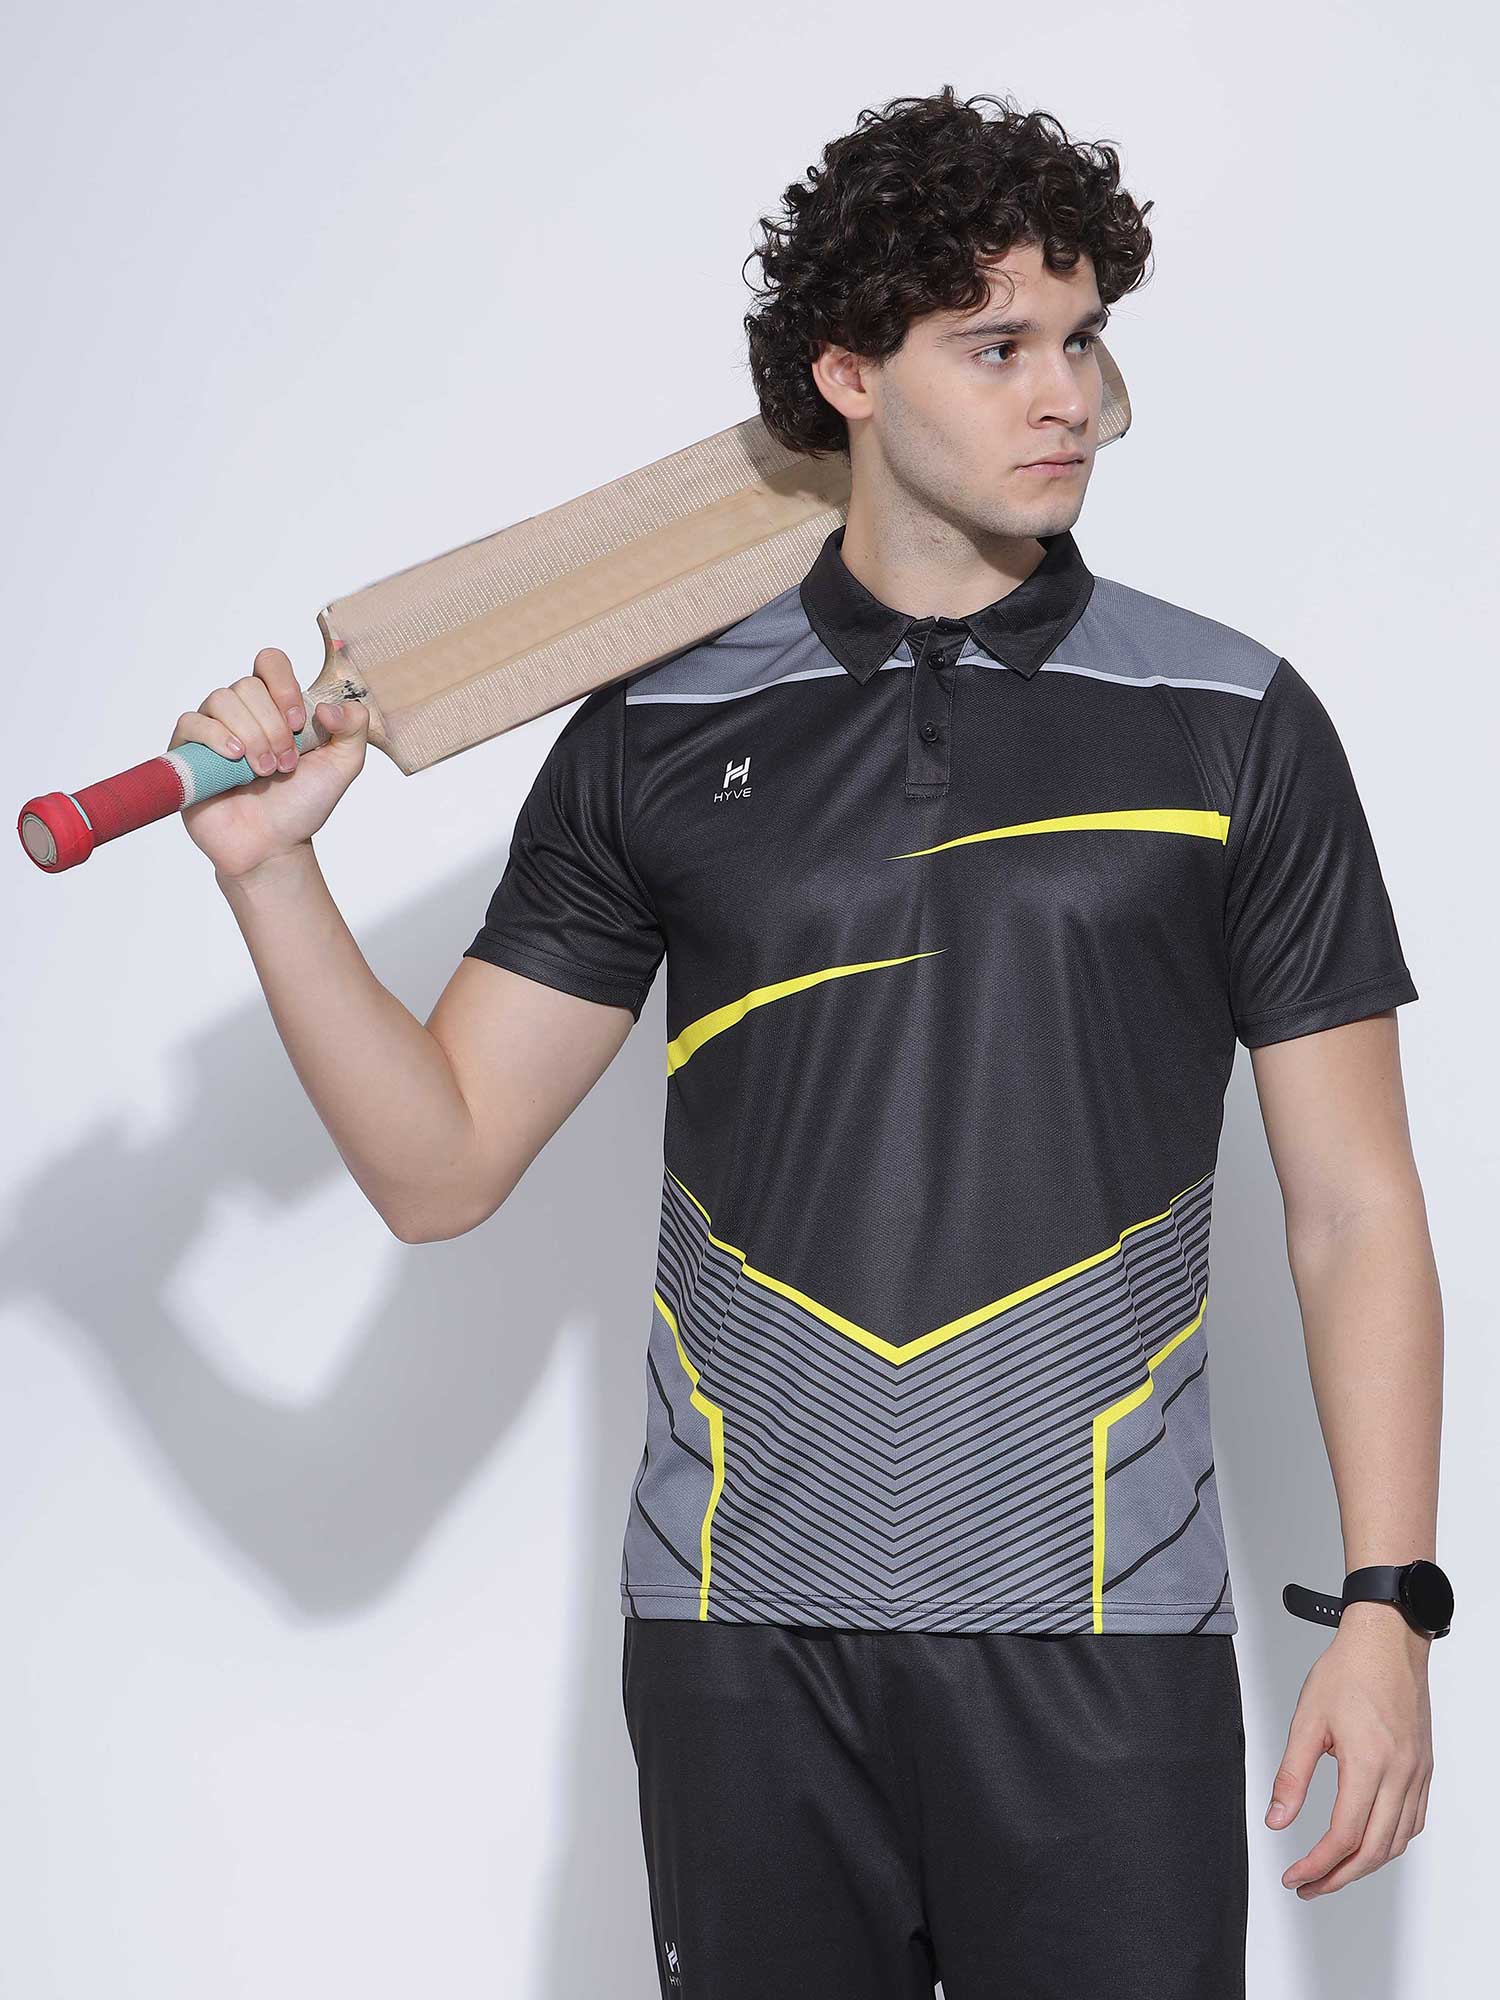 Cricket Uniform buy Mens Cricket UniformsCricket ShirtsCricket Trousers  custom new design cricket uniforms on China Suppliers Mobile  144257668